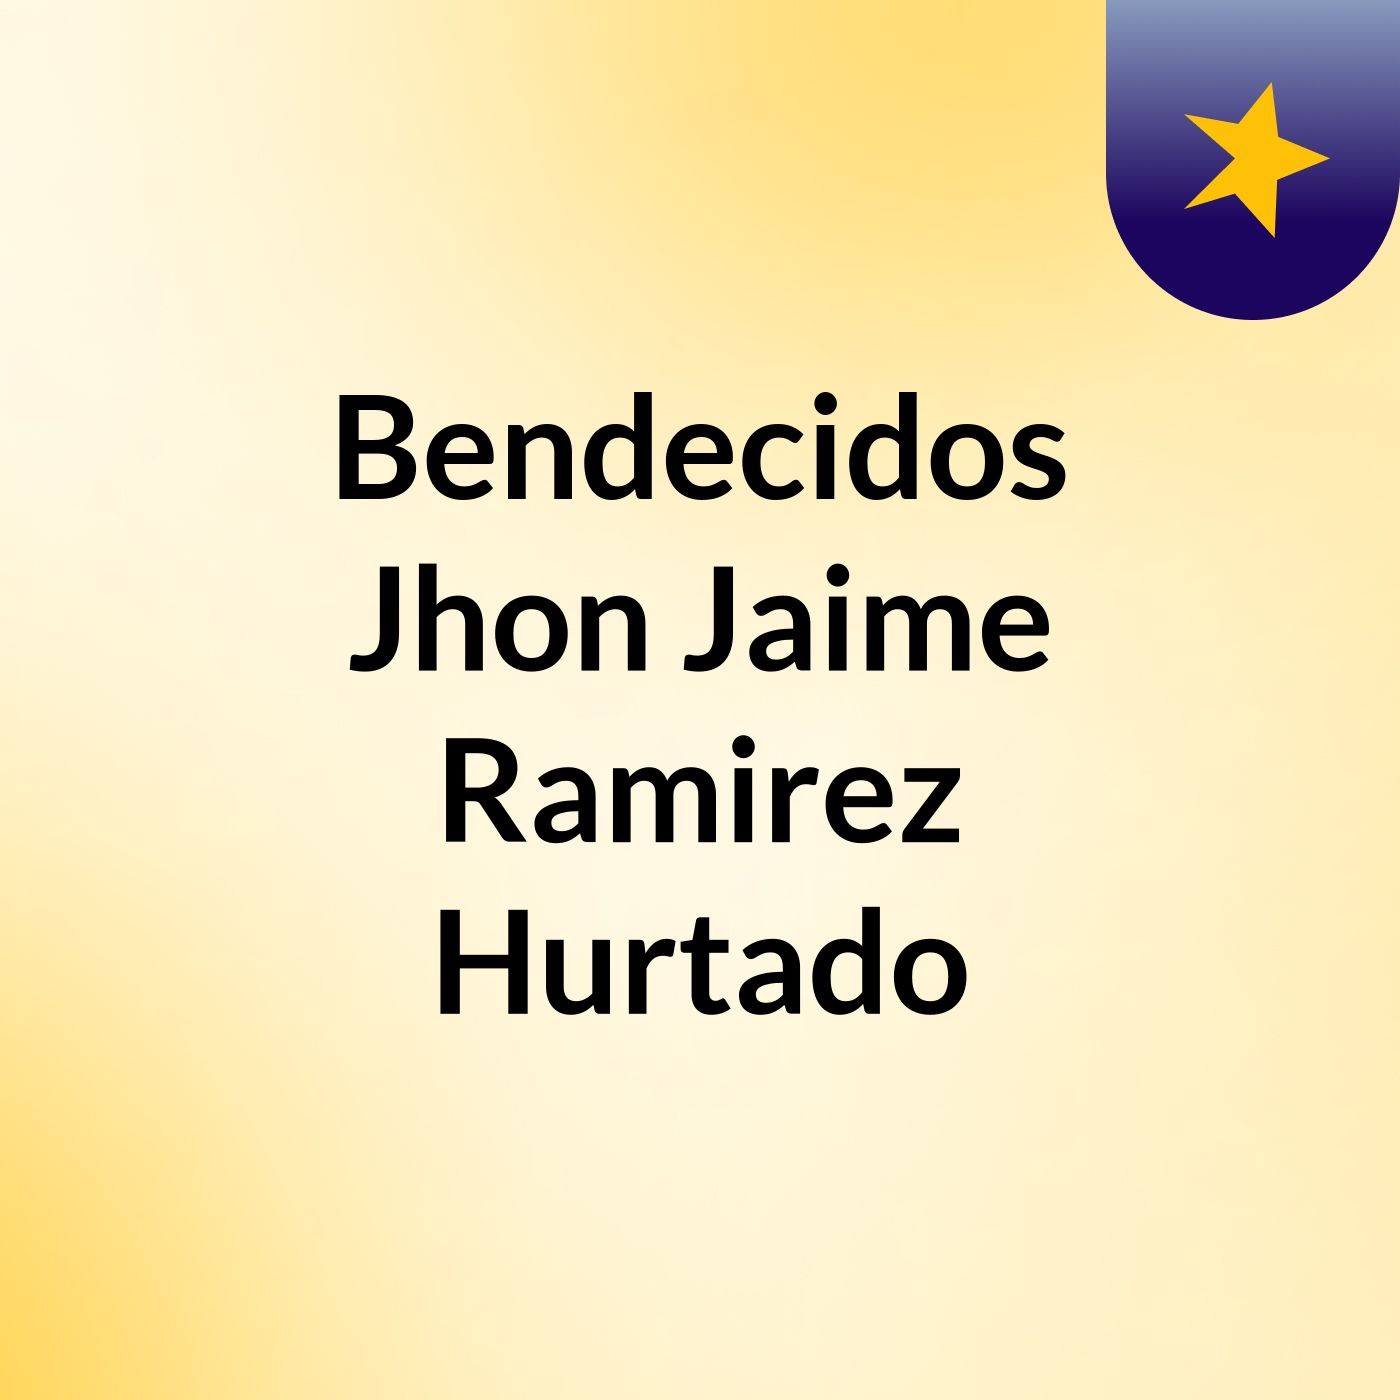 Bendecidos Jhon Jaime Ramirez Hurtado